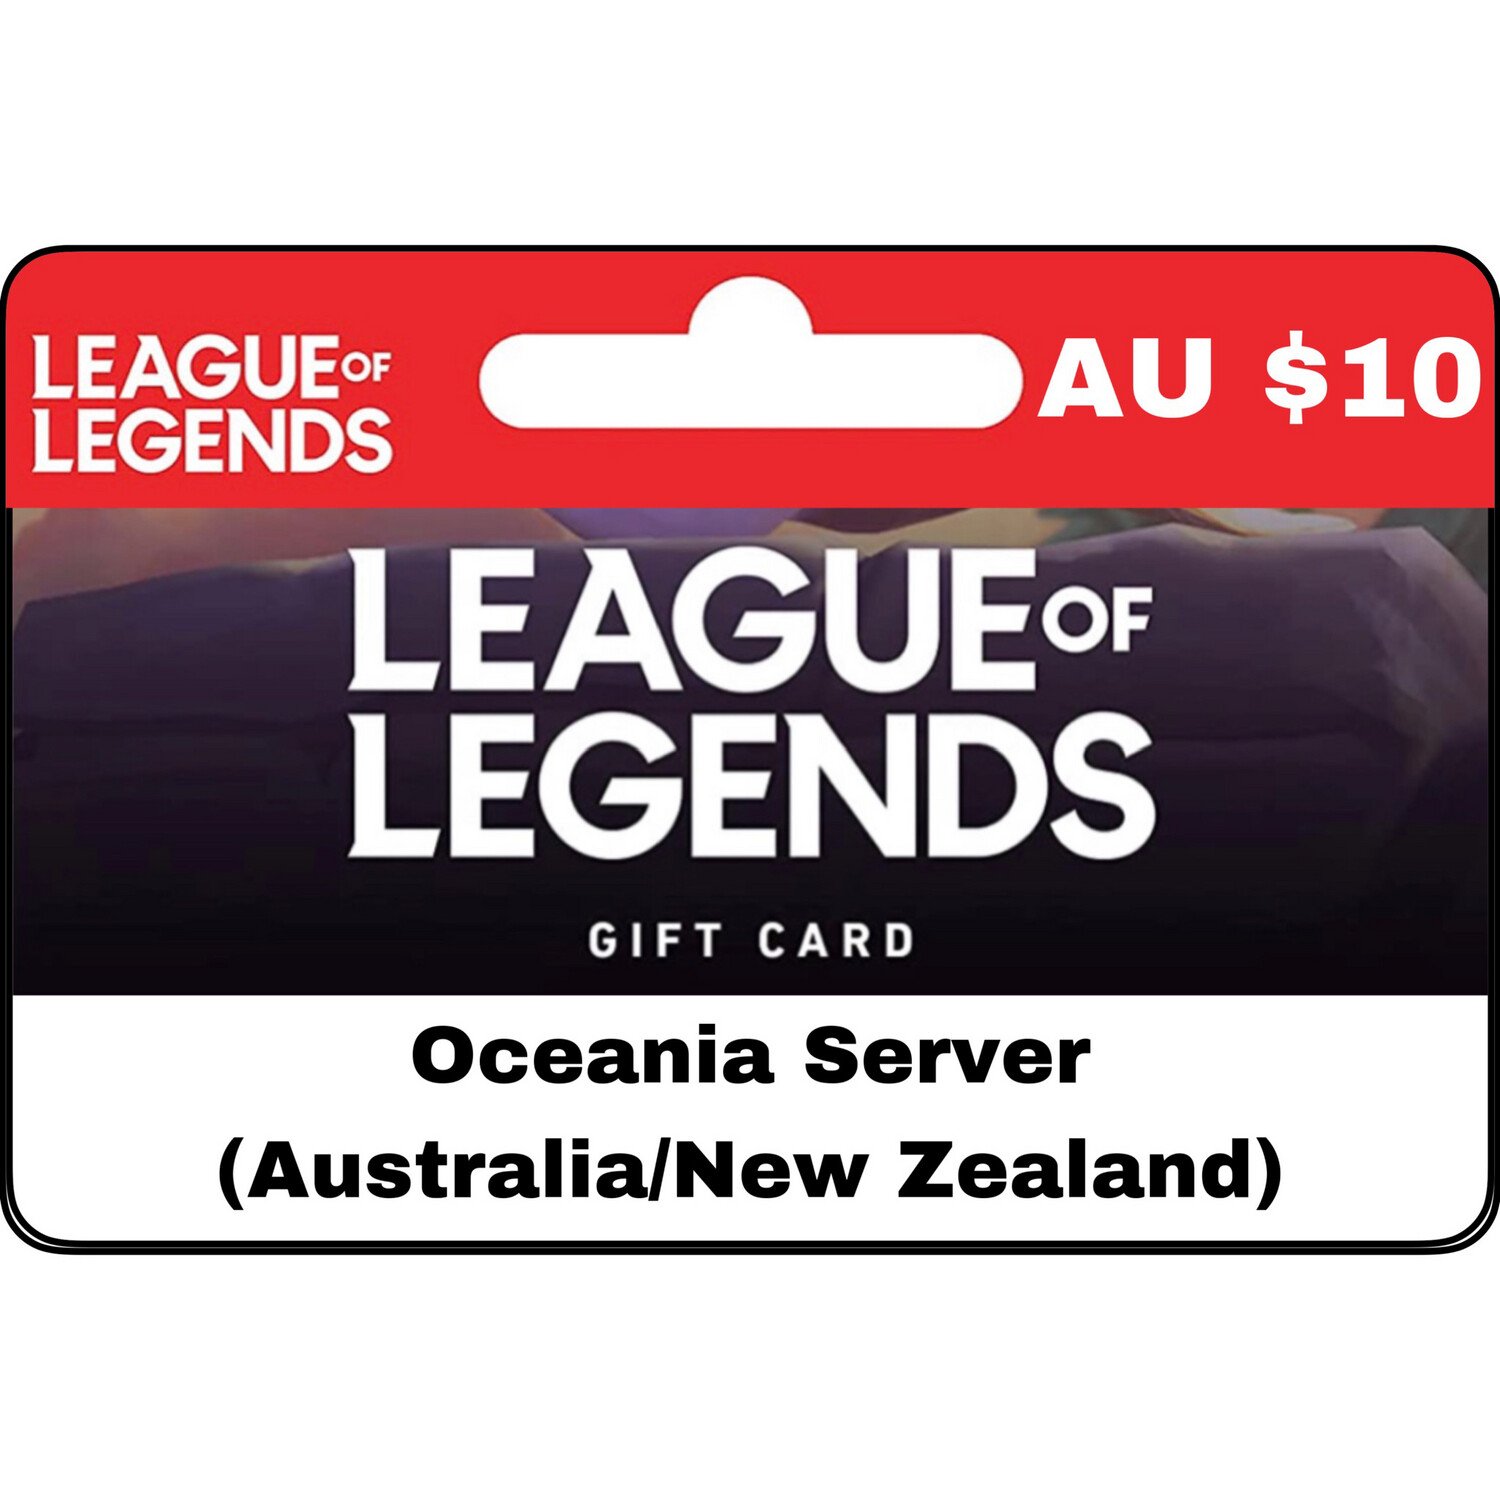 League of Legends AUD $10 Oceania Server Gift Card